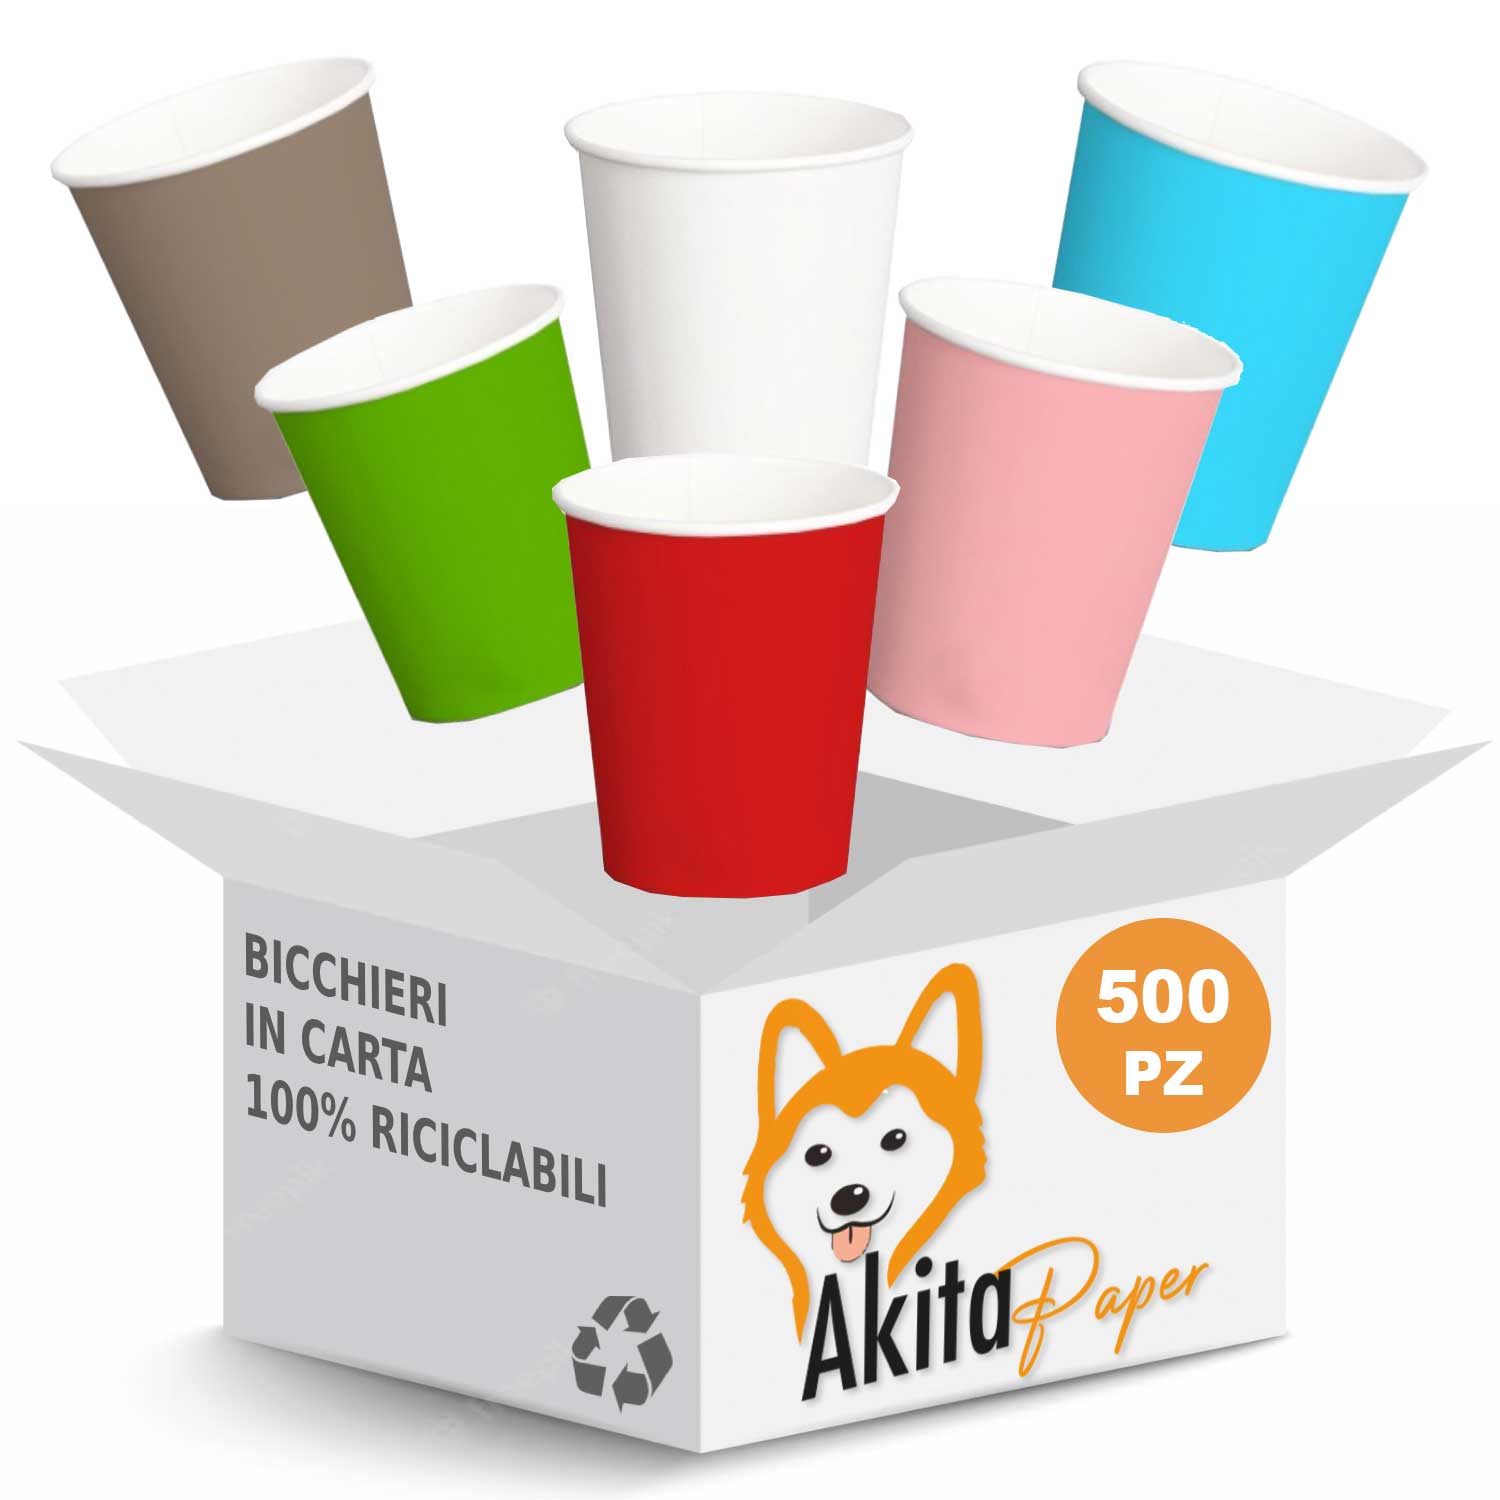 Akitaink 500 pz bicchieri monouso in carta colorati da 180-200 ml bicchiere com